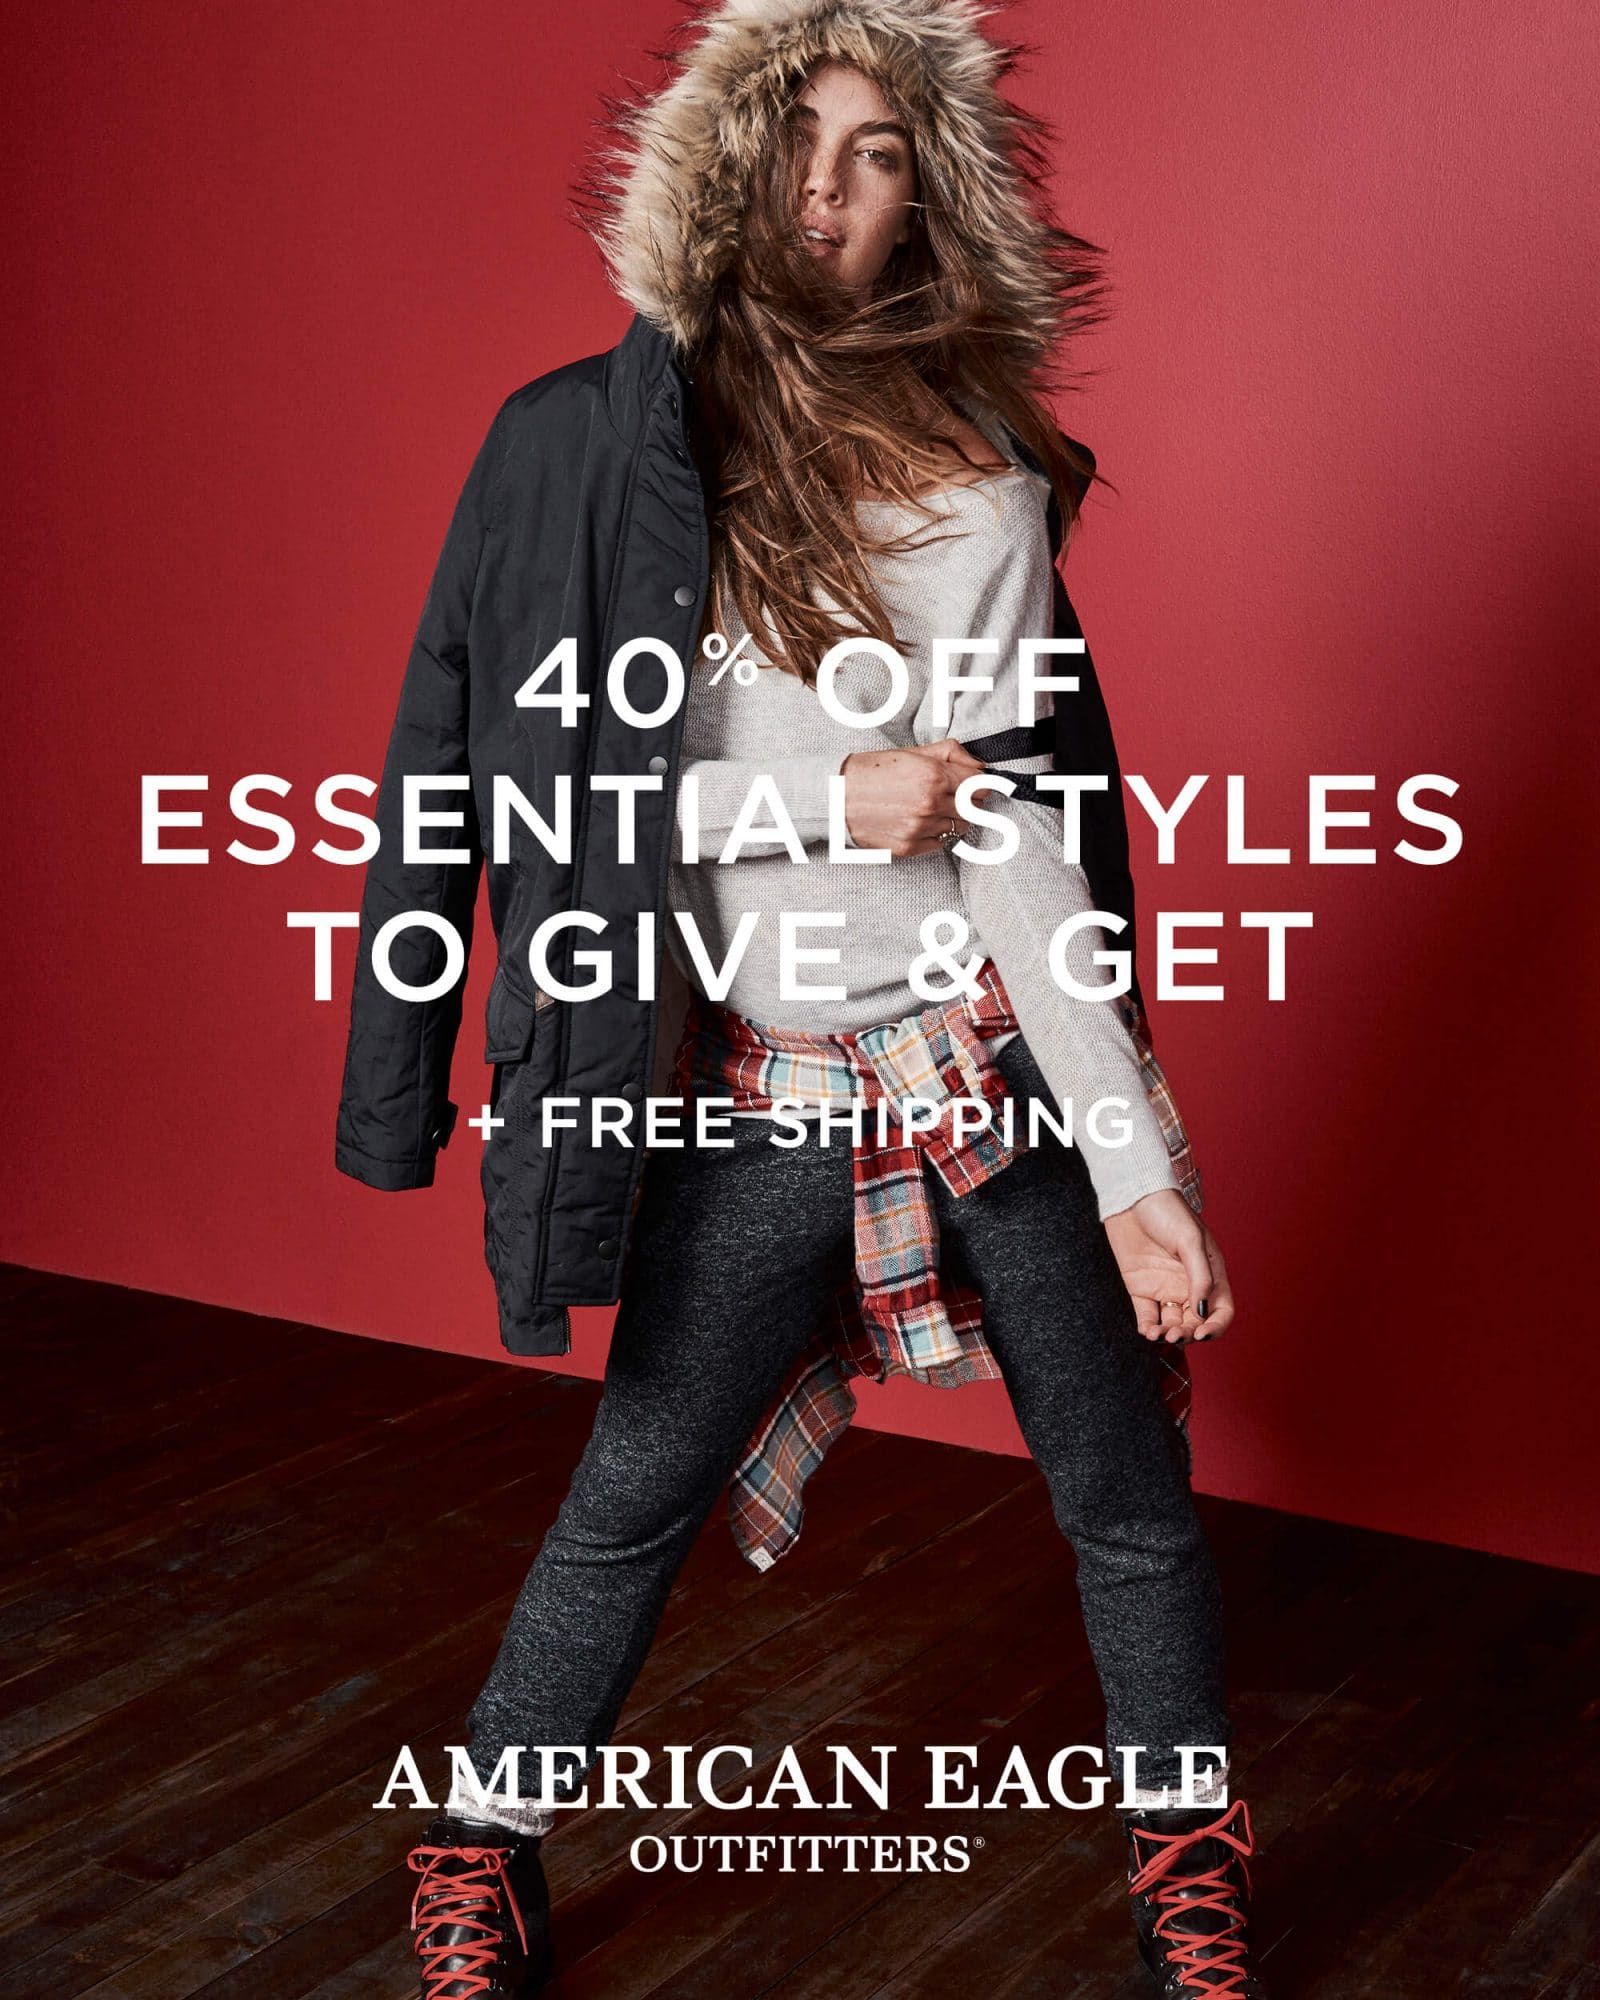 American Eagle Black Friday Ad 2016